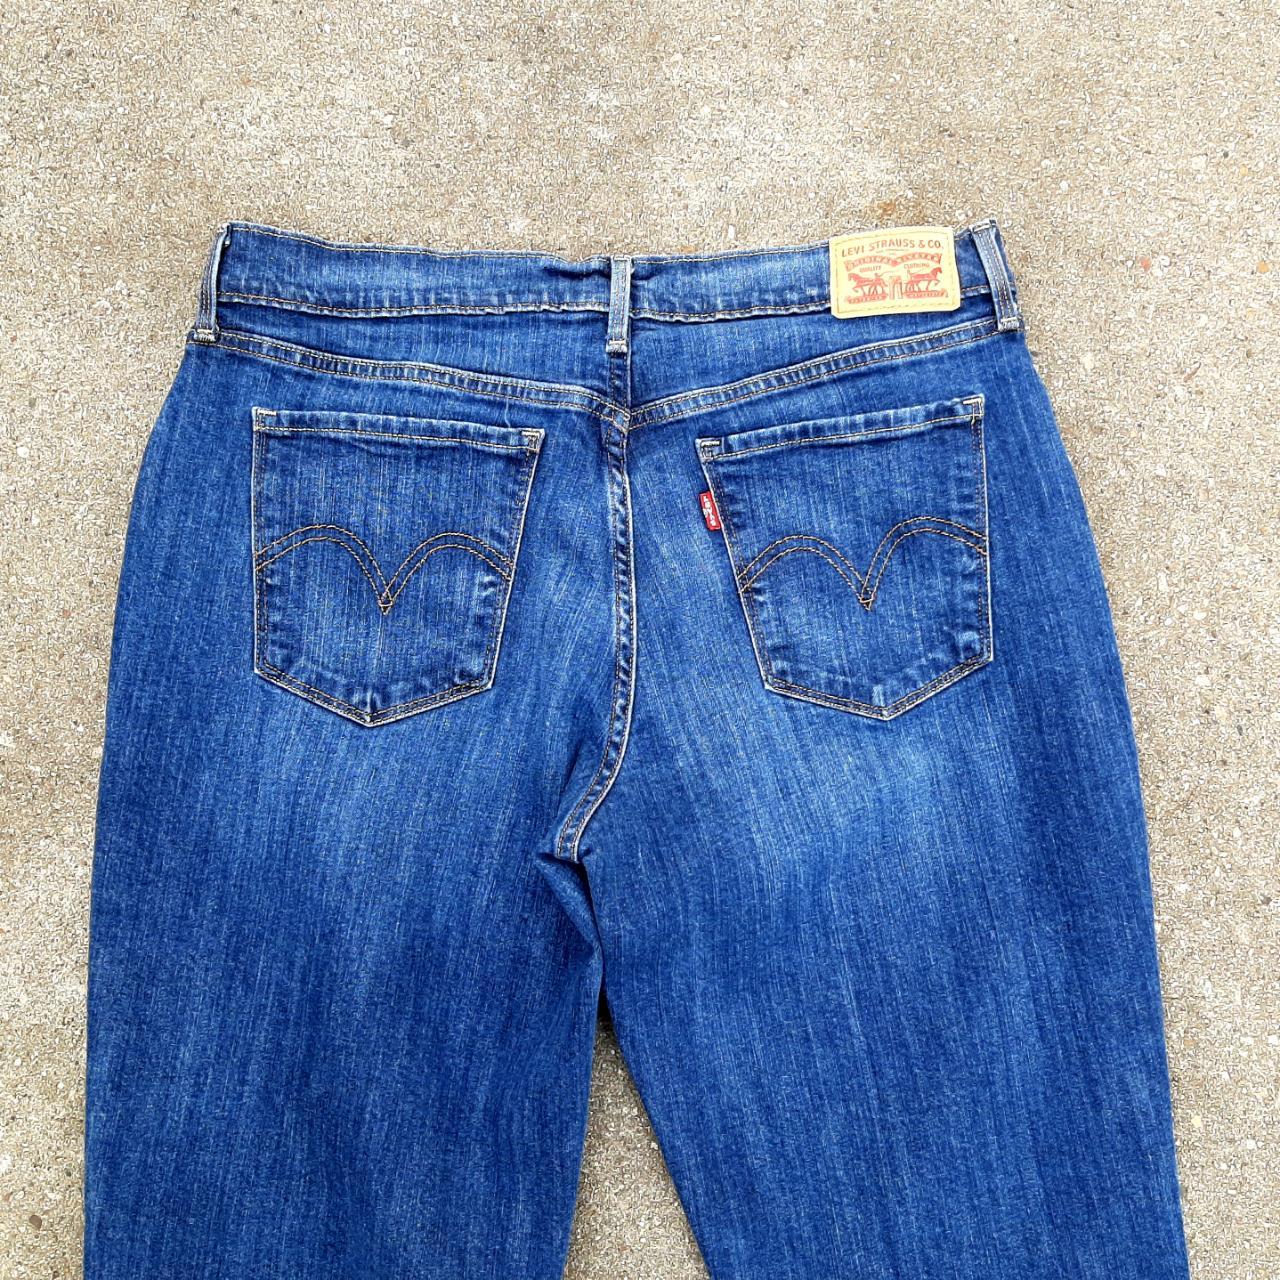 Beautiful Pair of Vintage Levi's Jeans! Style is... - Depop